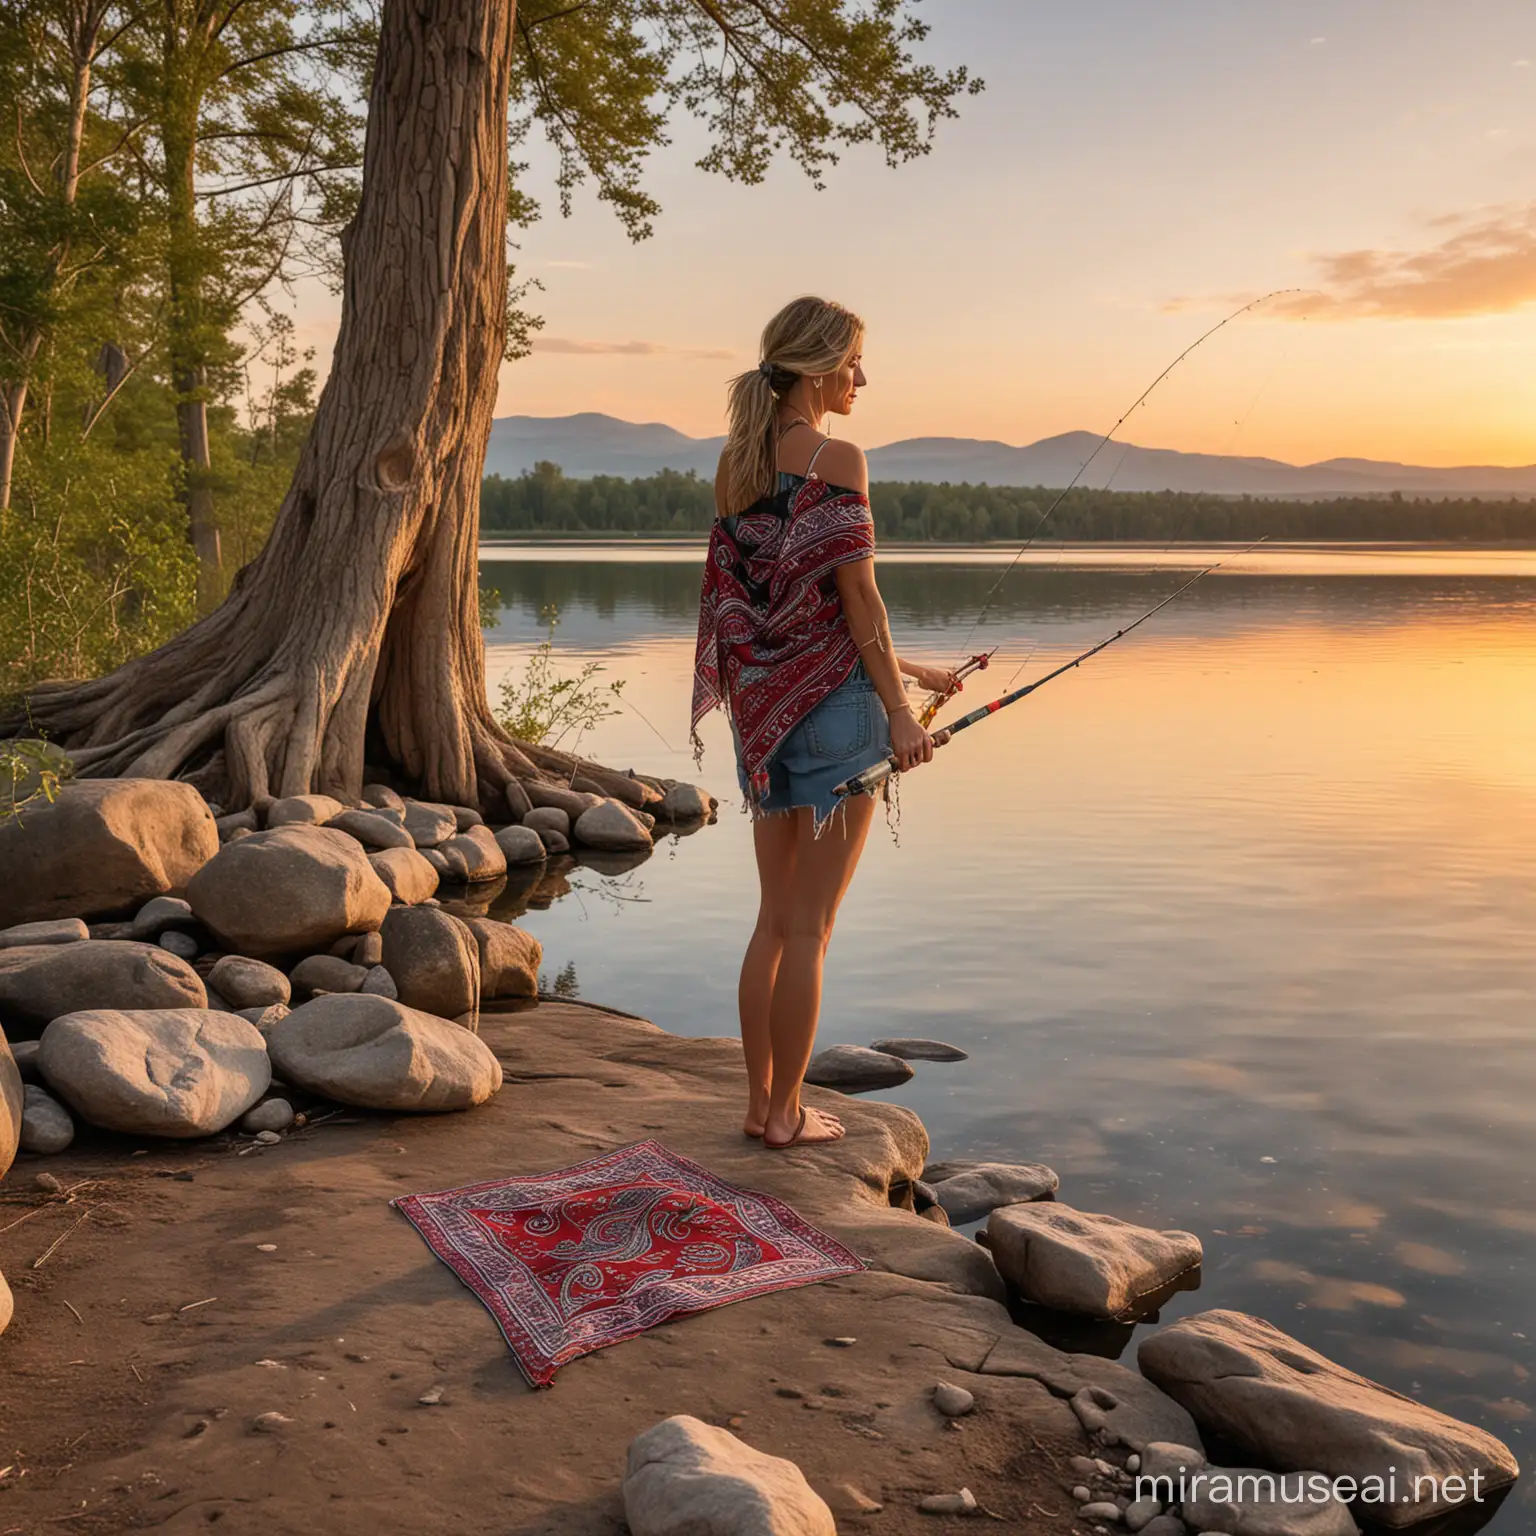 Peace, perfection, huge lake, large rocks, fishing, trees, sunset, bare foot woman fishing, woman wearing paisley bandanna 